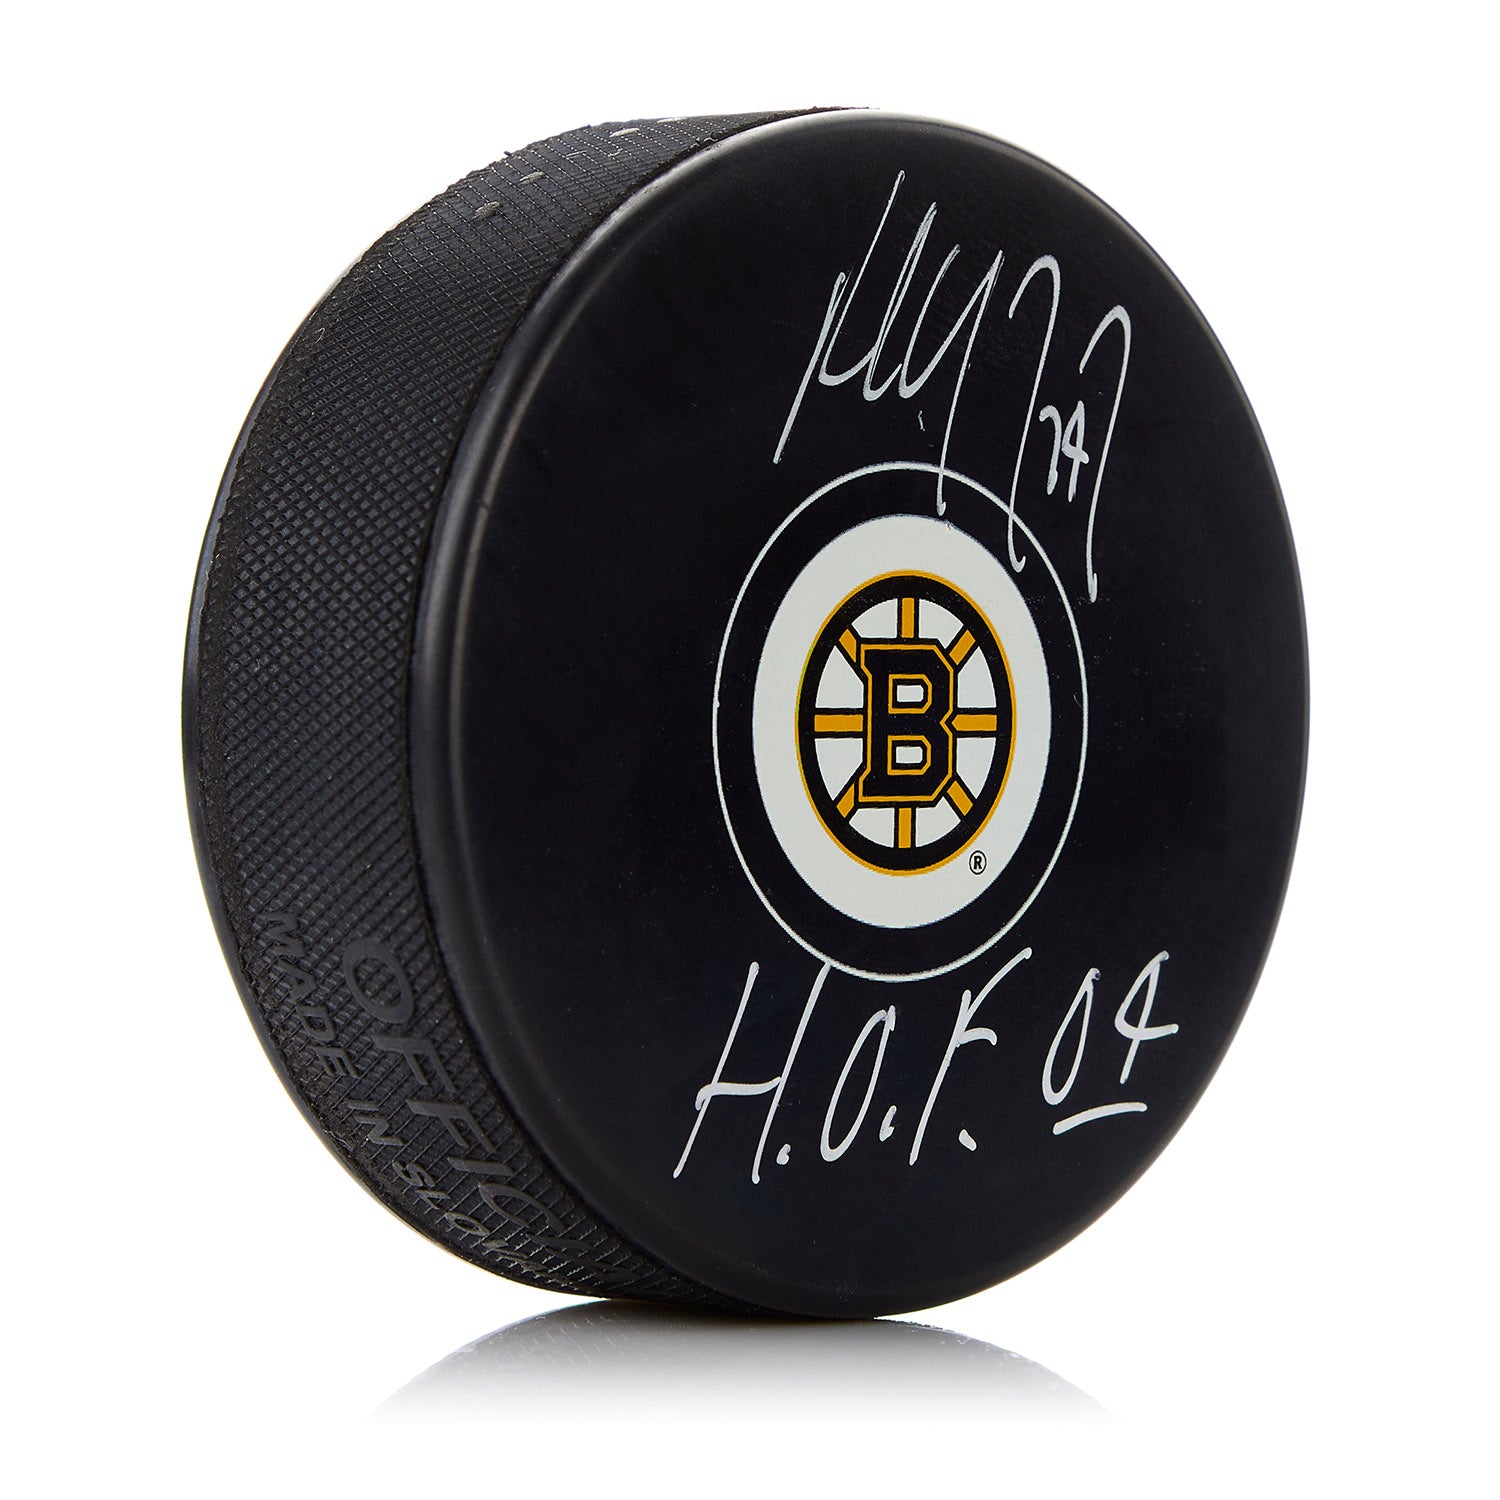 Paul Coffey Boston Bruins Signed Hockey Puck with HOF Note